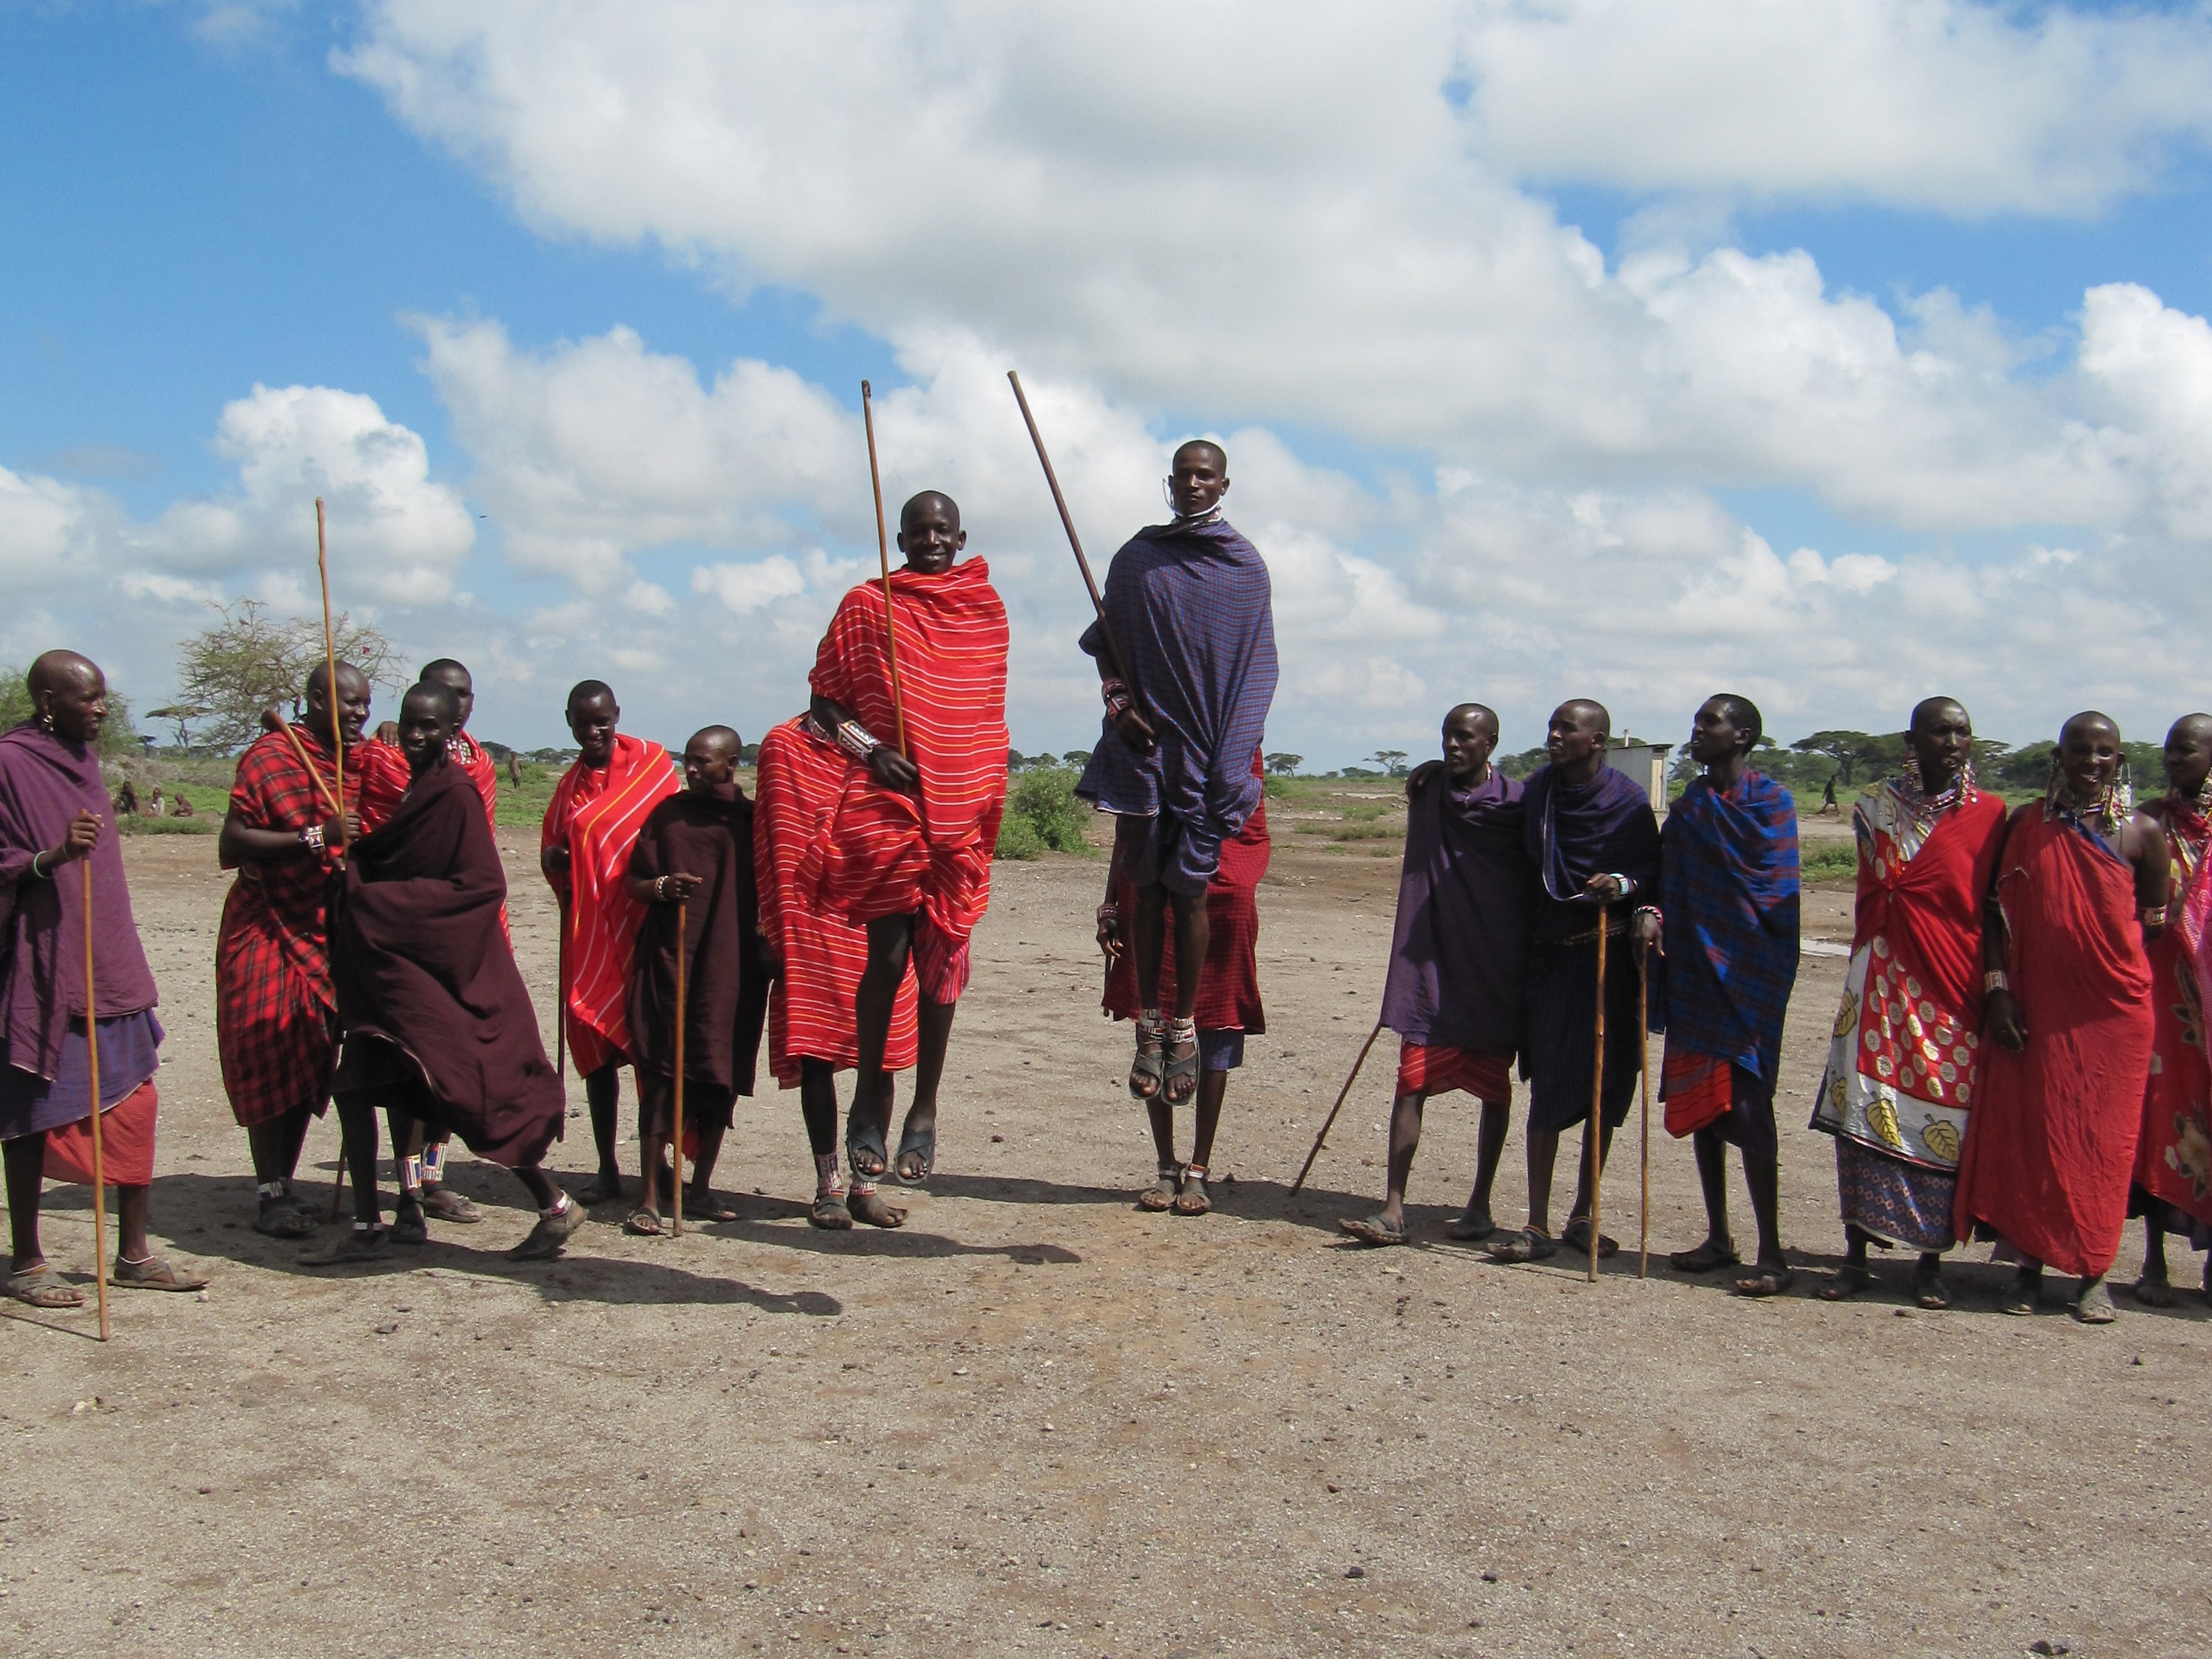 Regions of Kenya – Amboseli and Laikipia